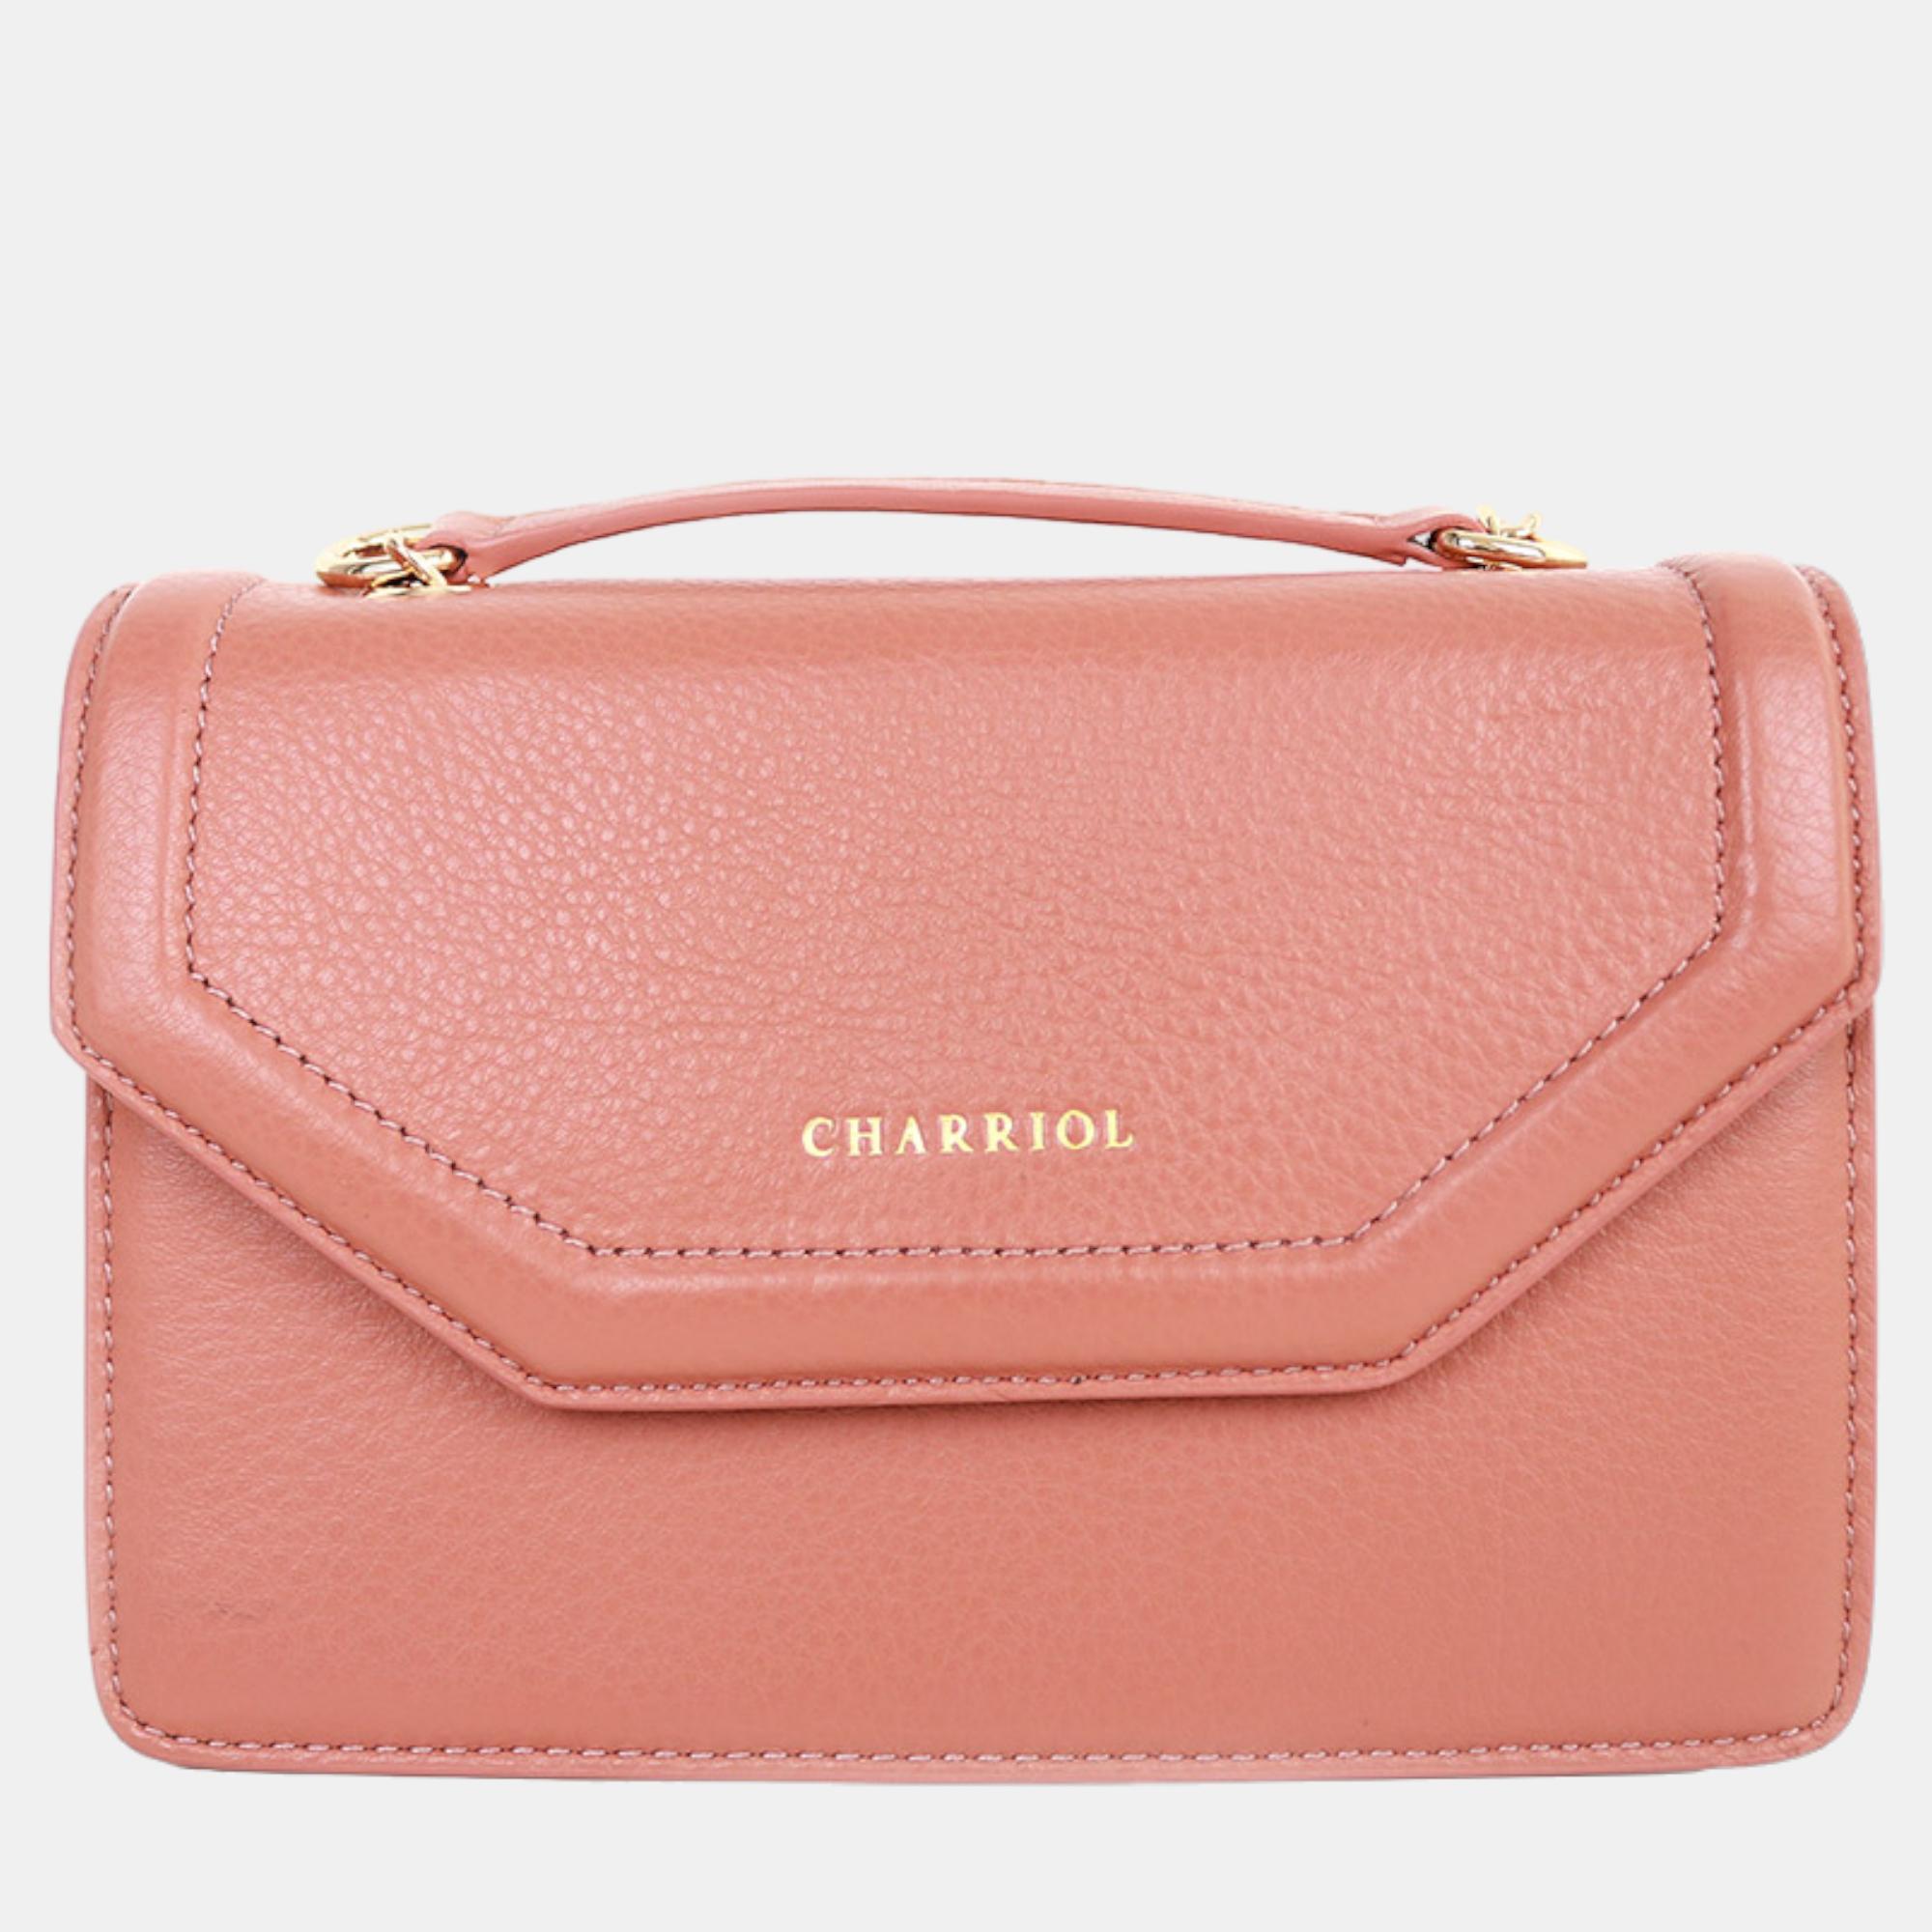 Charriol Light Brownn Leather Twilight Handbag